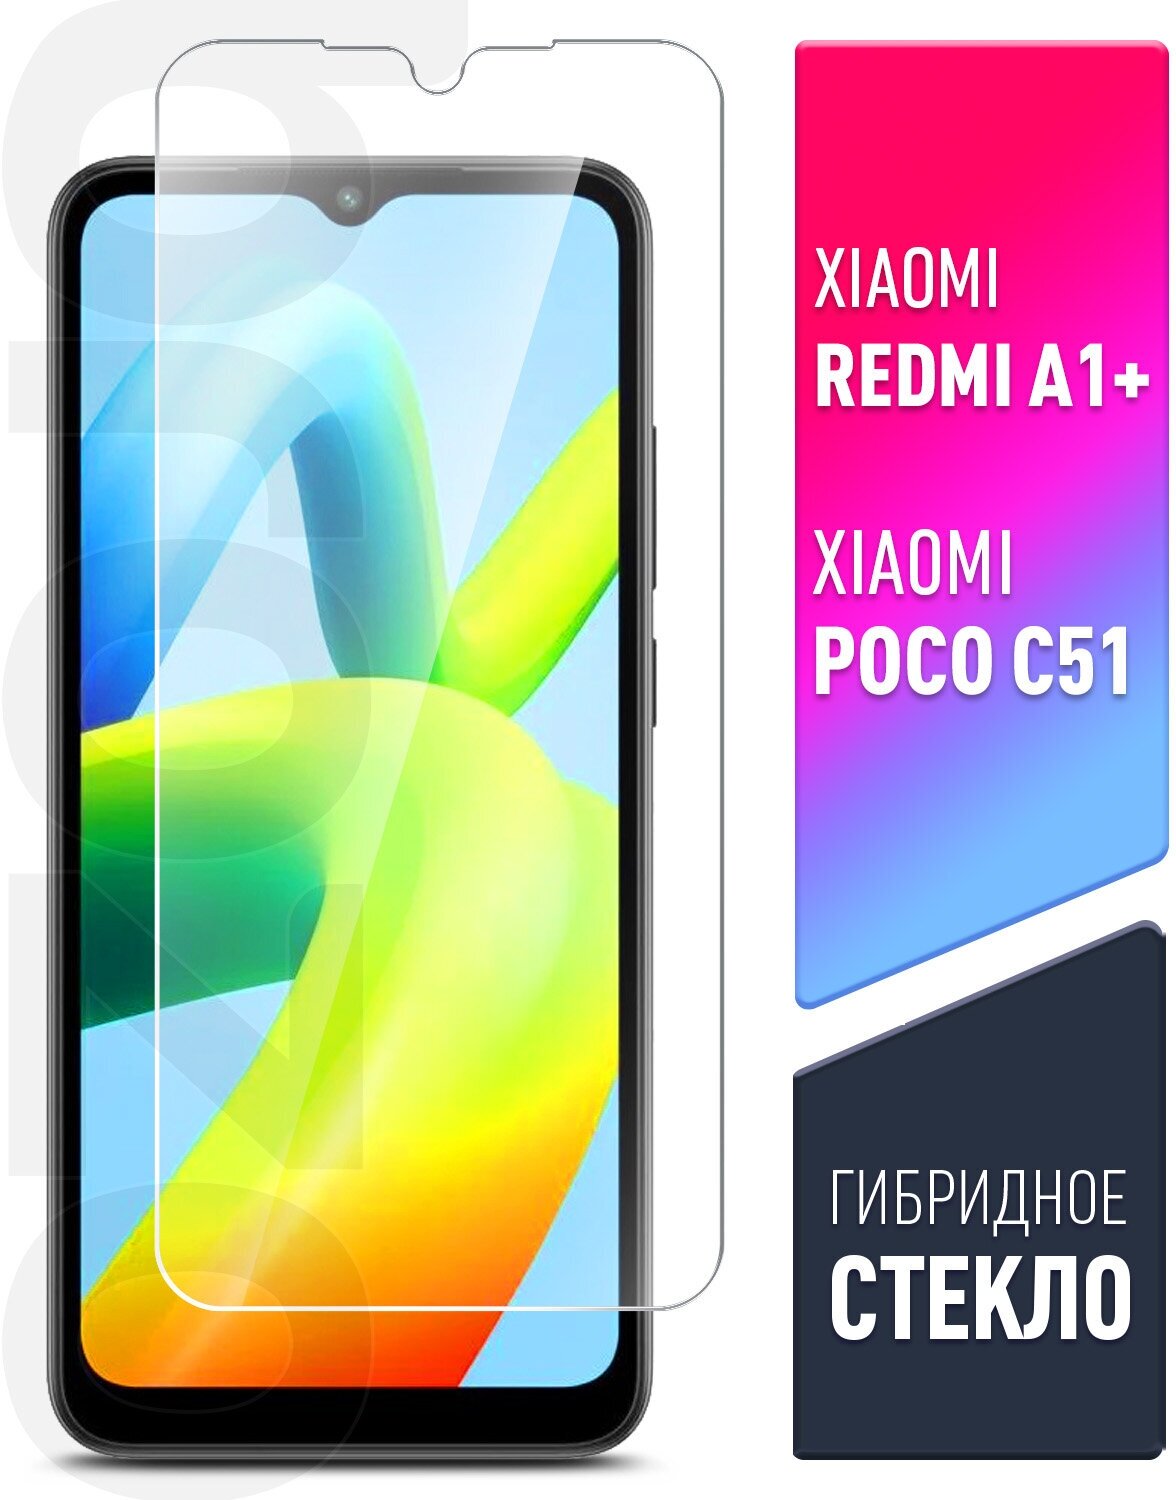 Защитное стекло на Xiaomi Redmi A1+/A2+/Poco C50/C51 (Ксиоми Редми А1+) гибридное - пленка + стекловолокно на Экран, прозрачное тонкое Hybrid Glass, Brozo